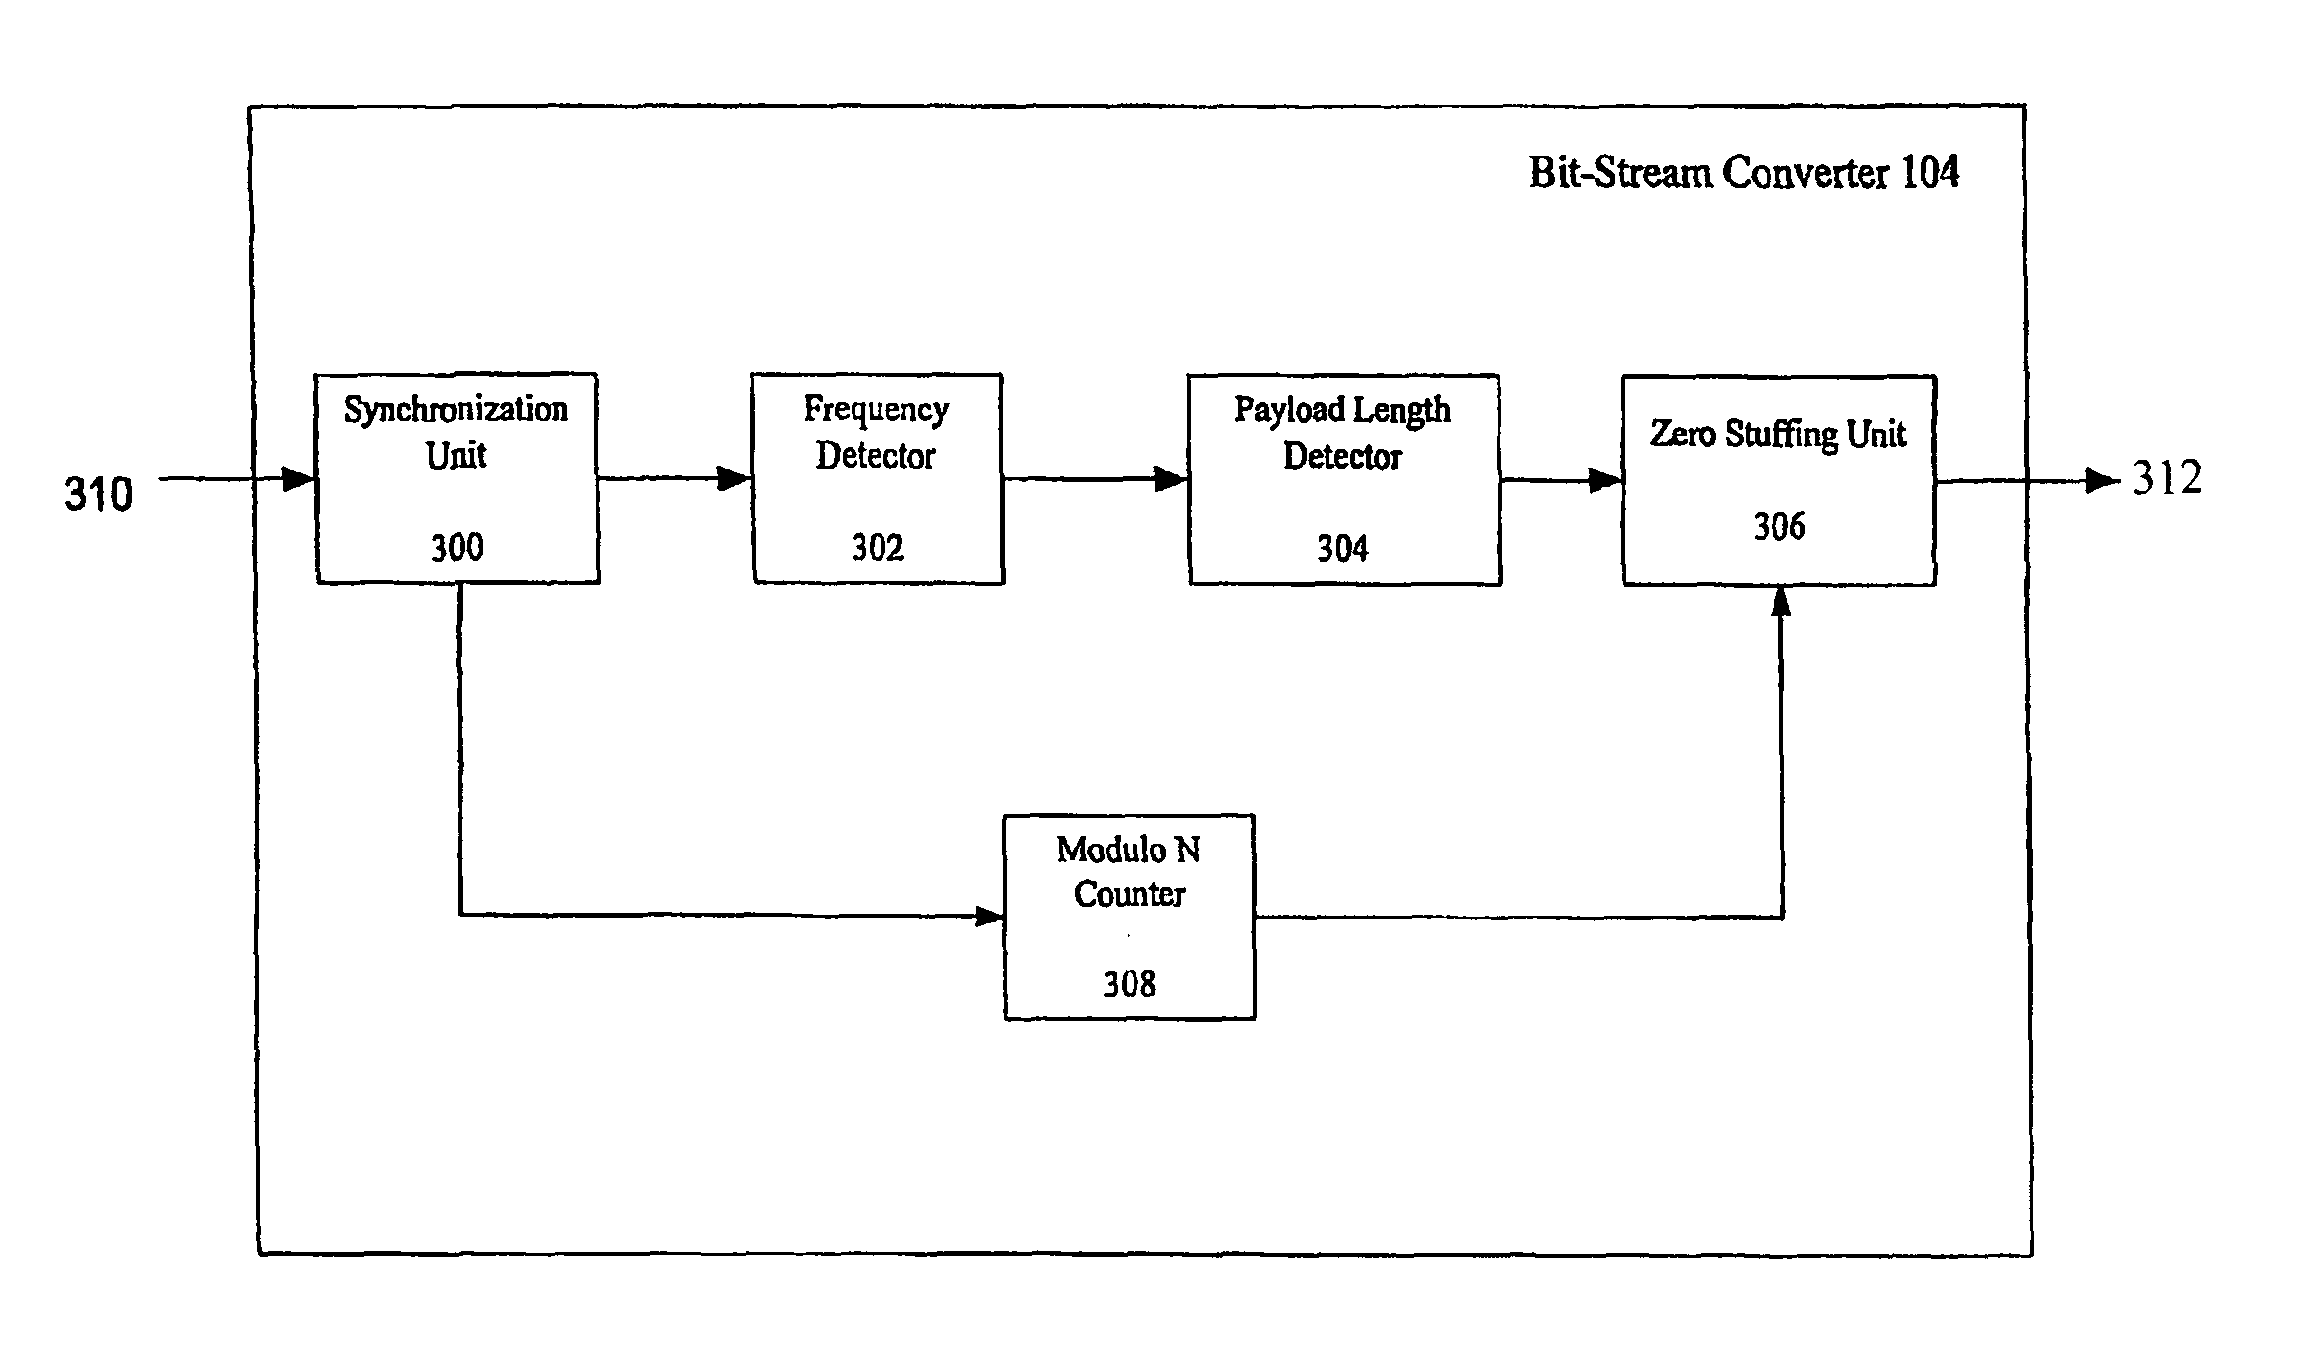 Bit stream conversion system